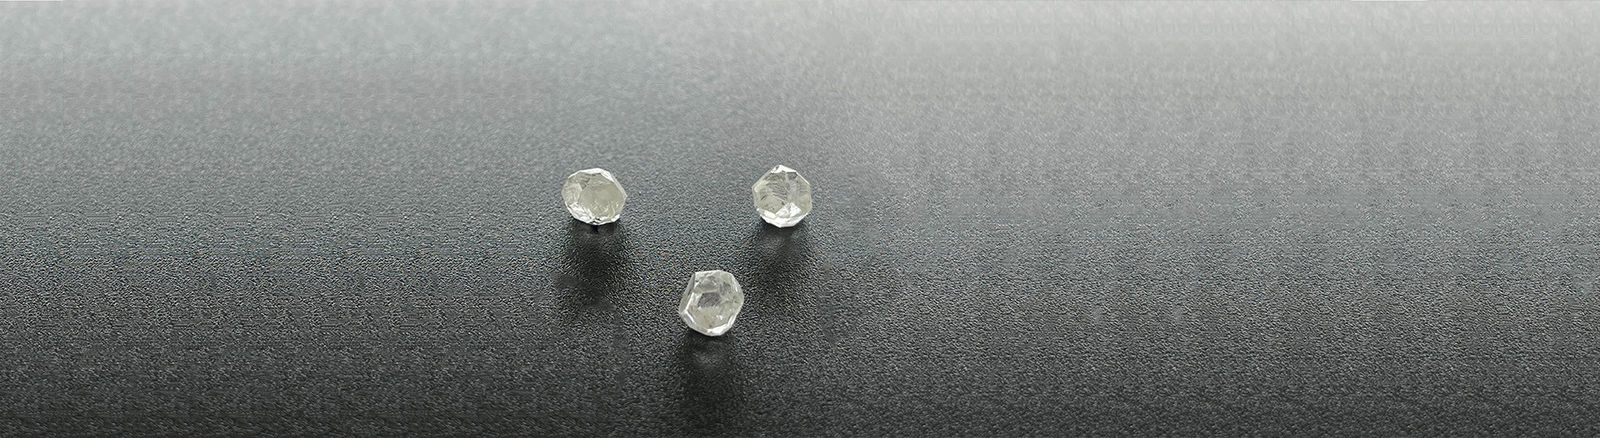 CVDの実験室によって育てられるダイヤモンド